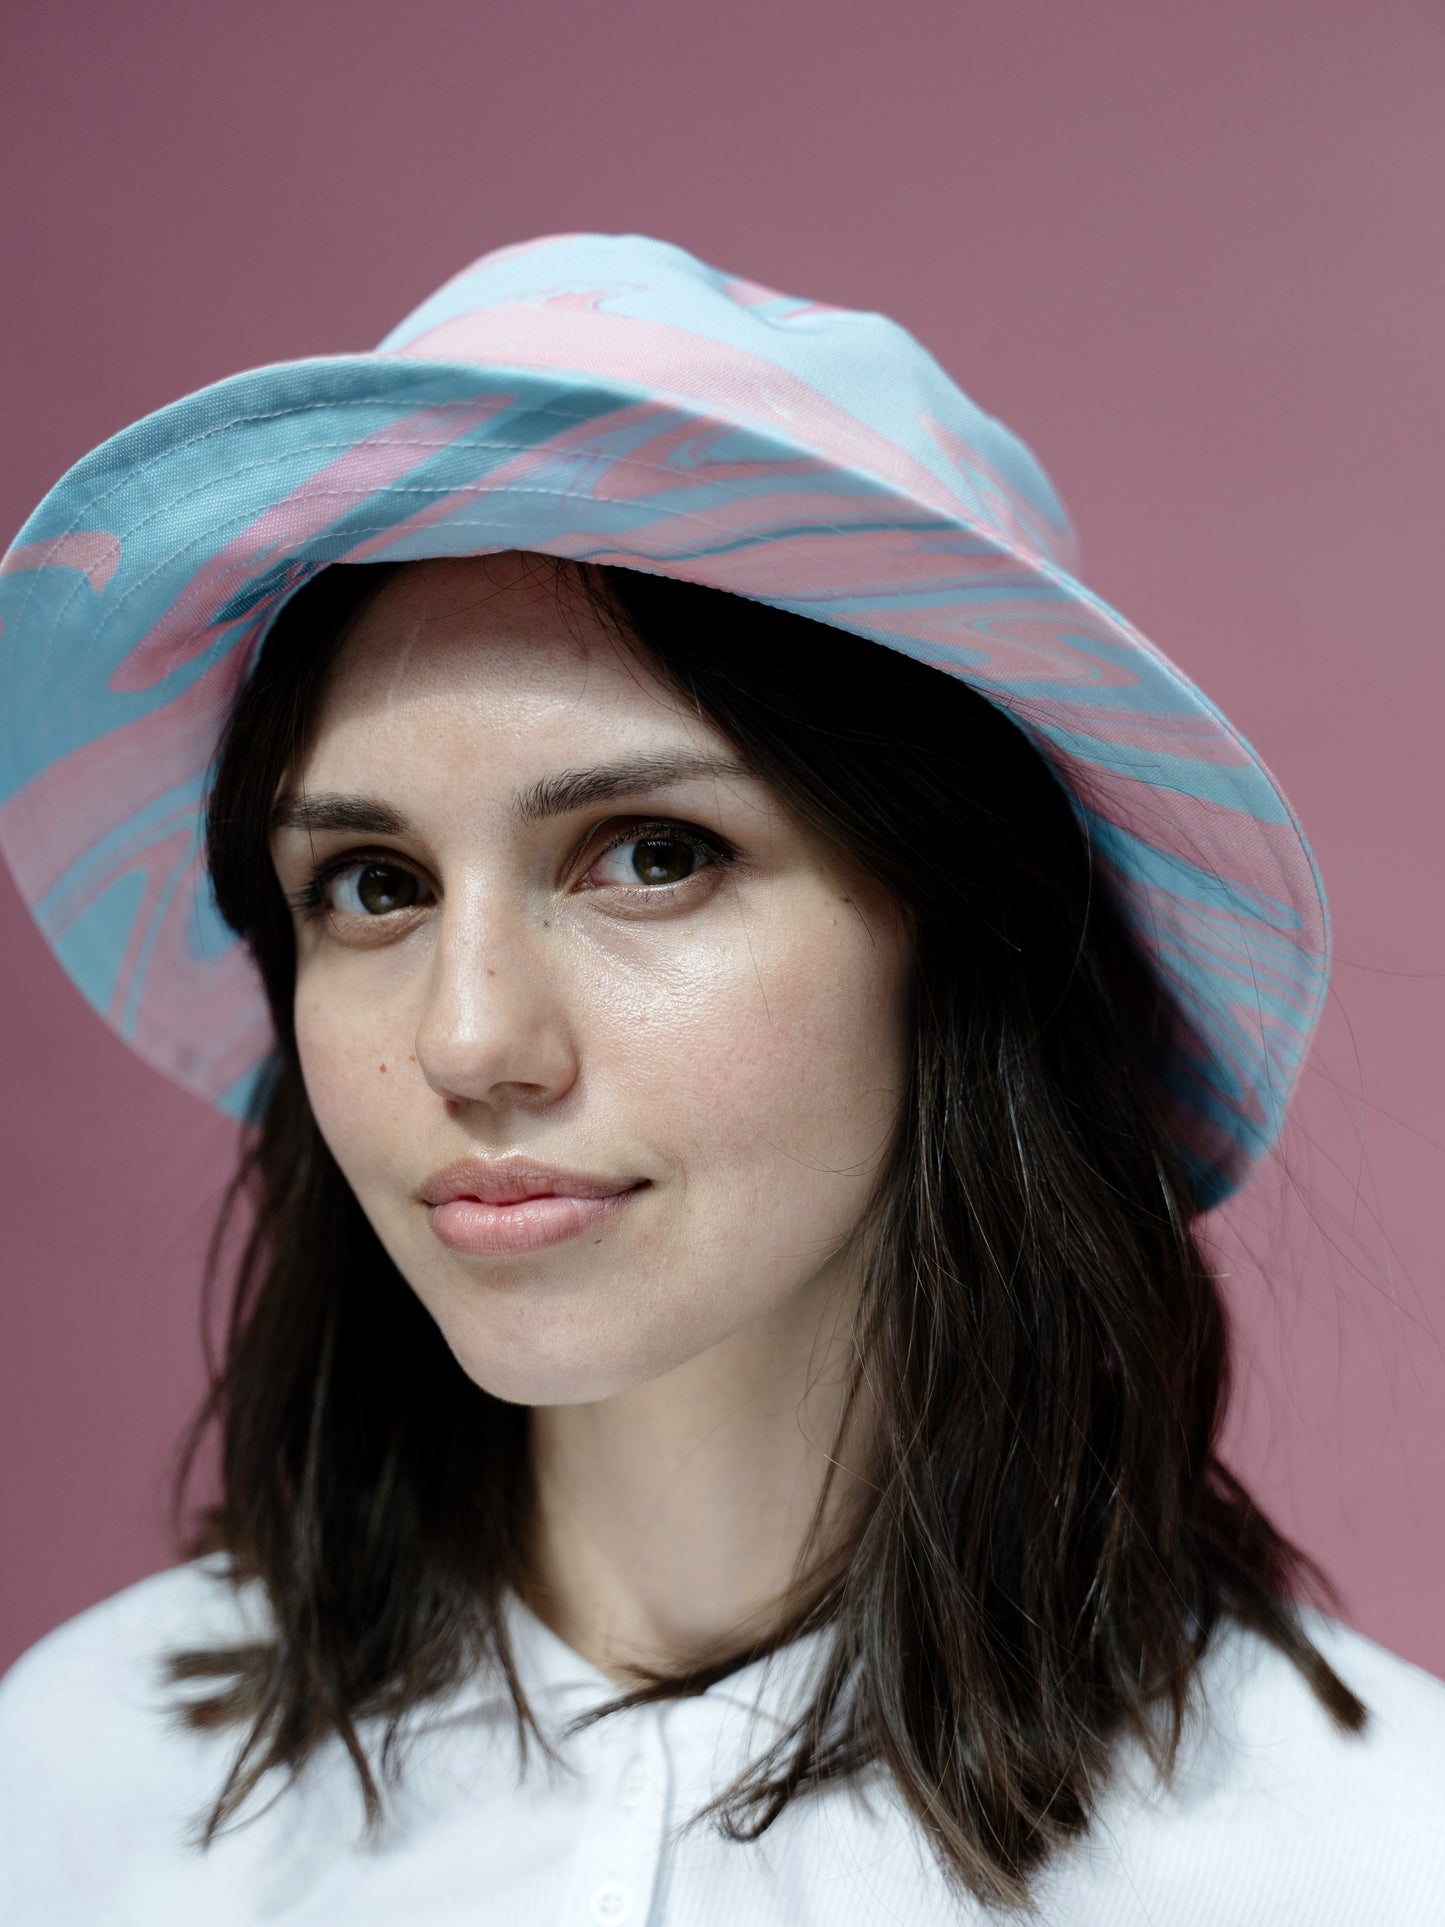 Unisex Trippy Stripe Bucket Hat in Pink & Blue